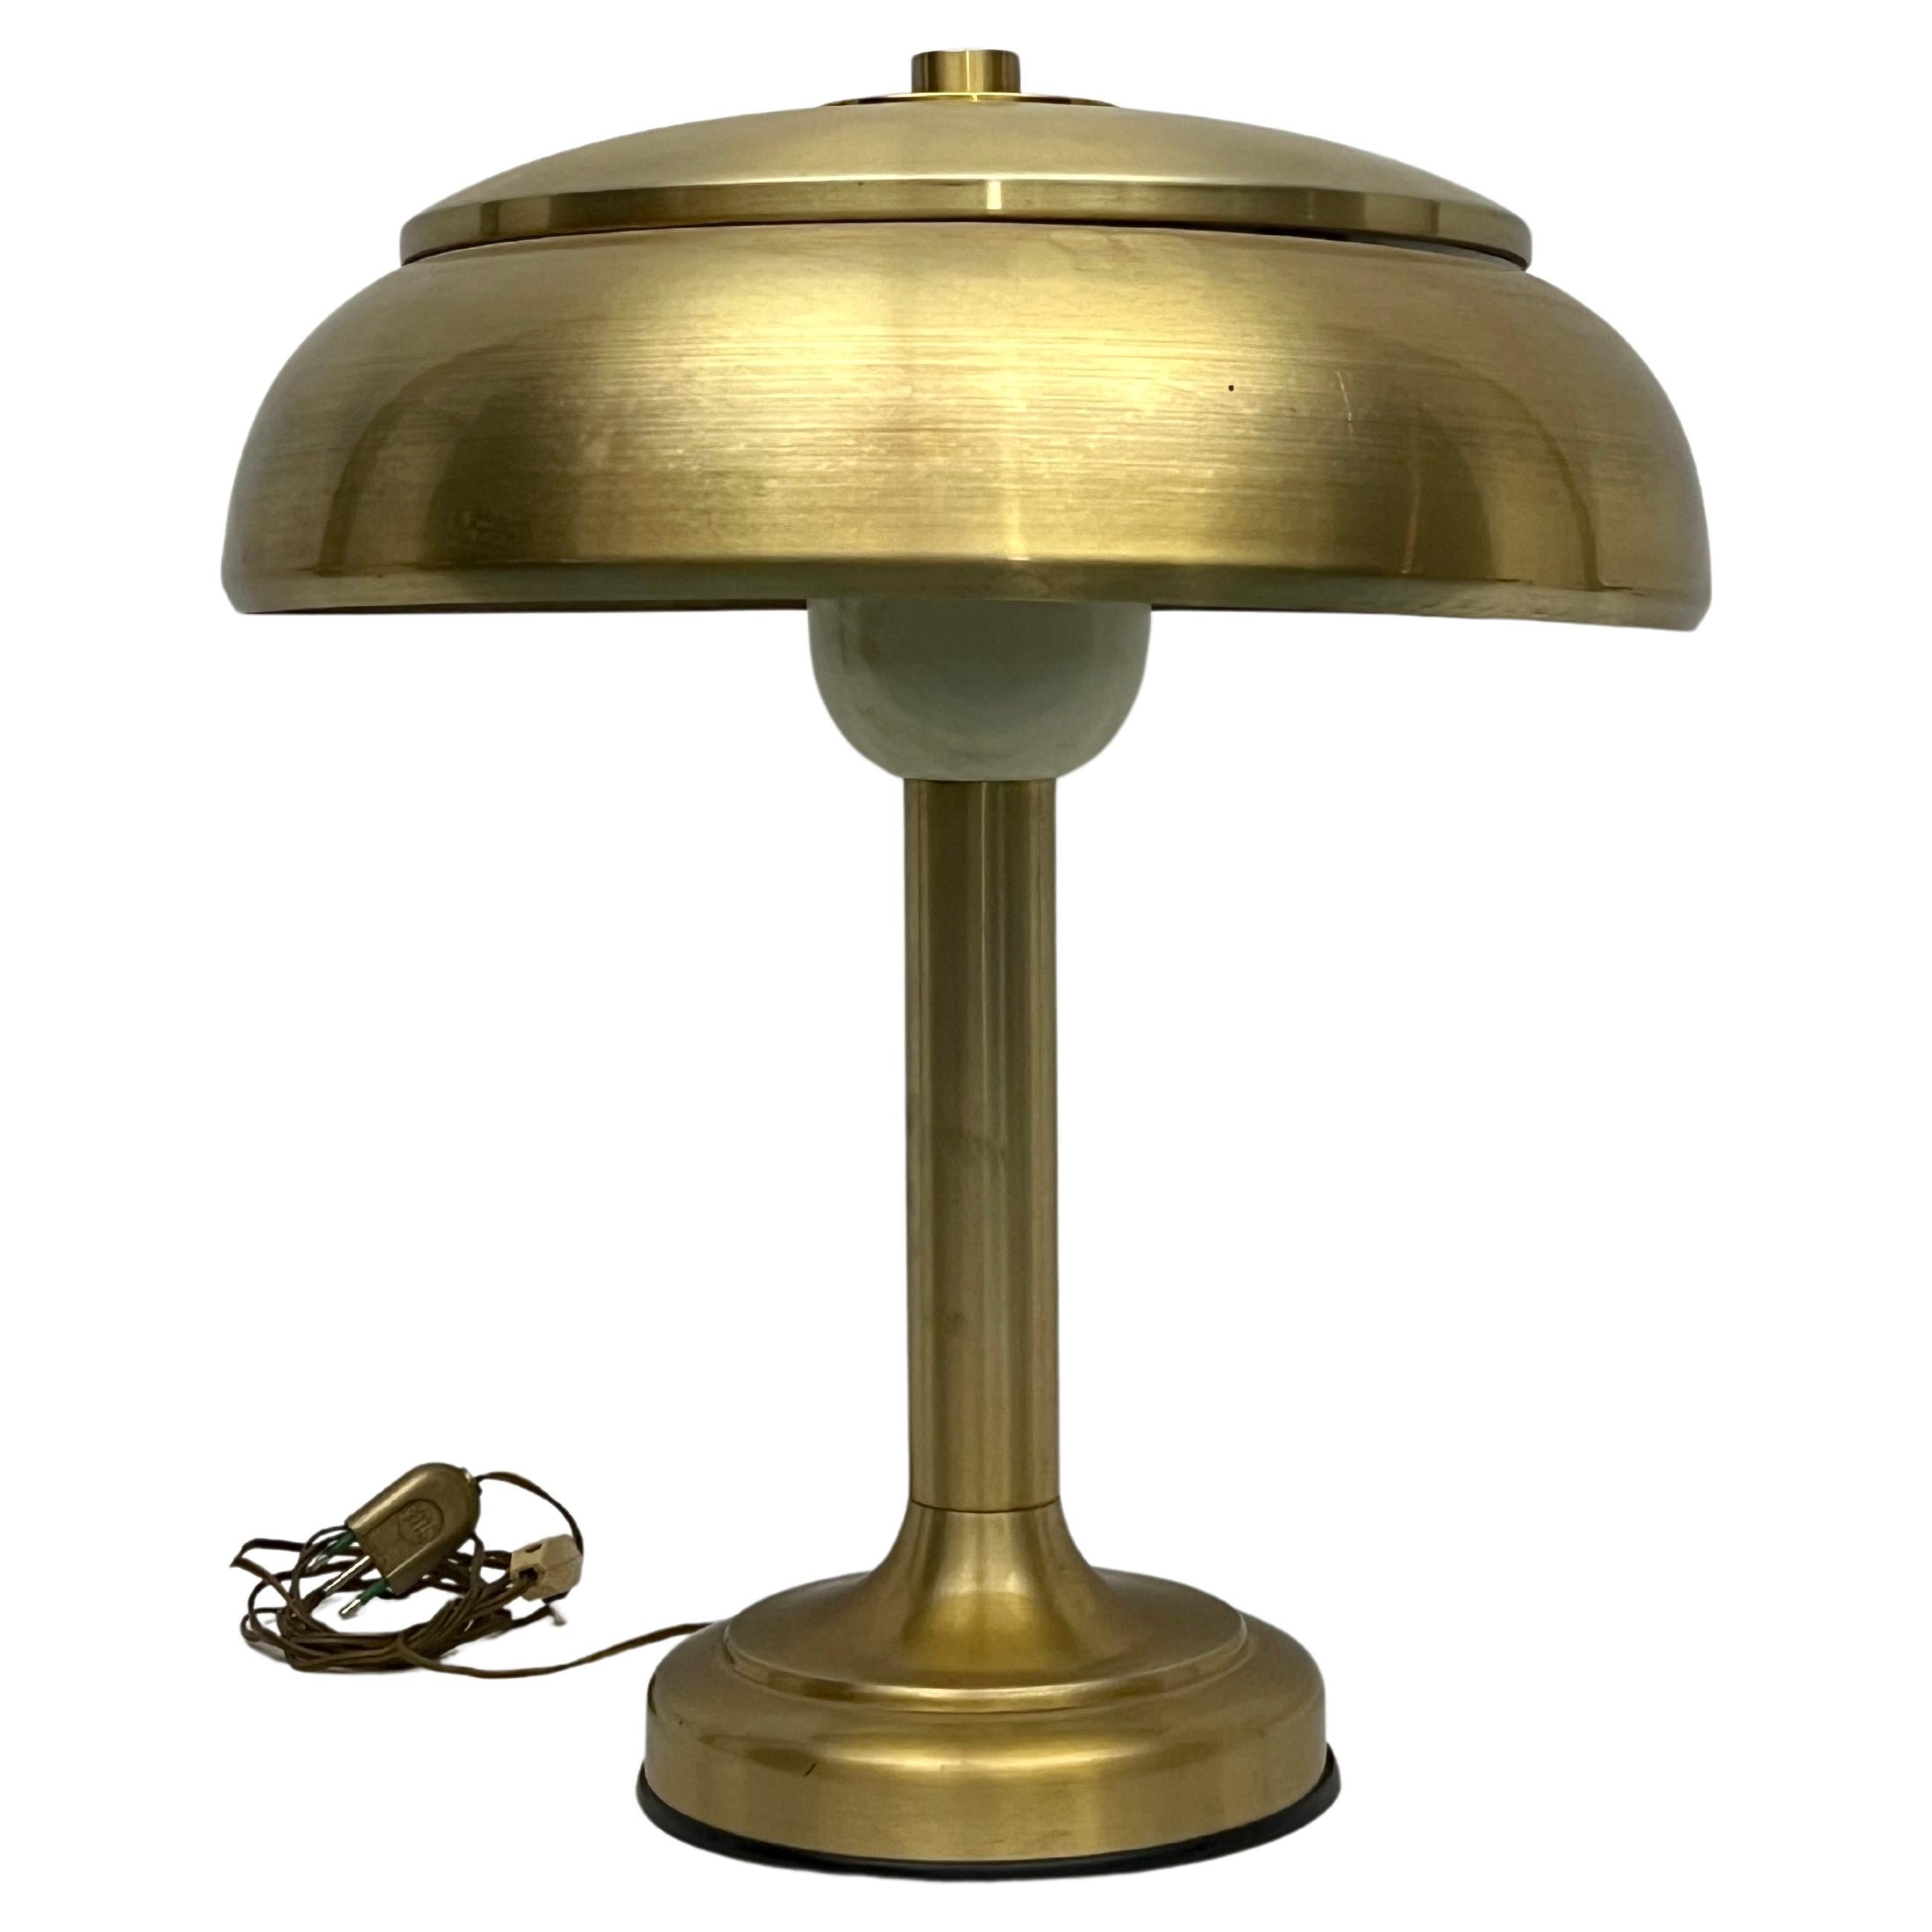 Vintage Ministerial vergoldete Tischlampe. Italien 1950er Jahre